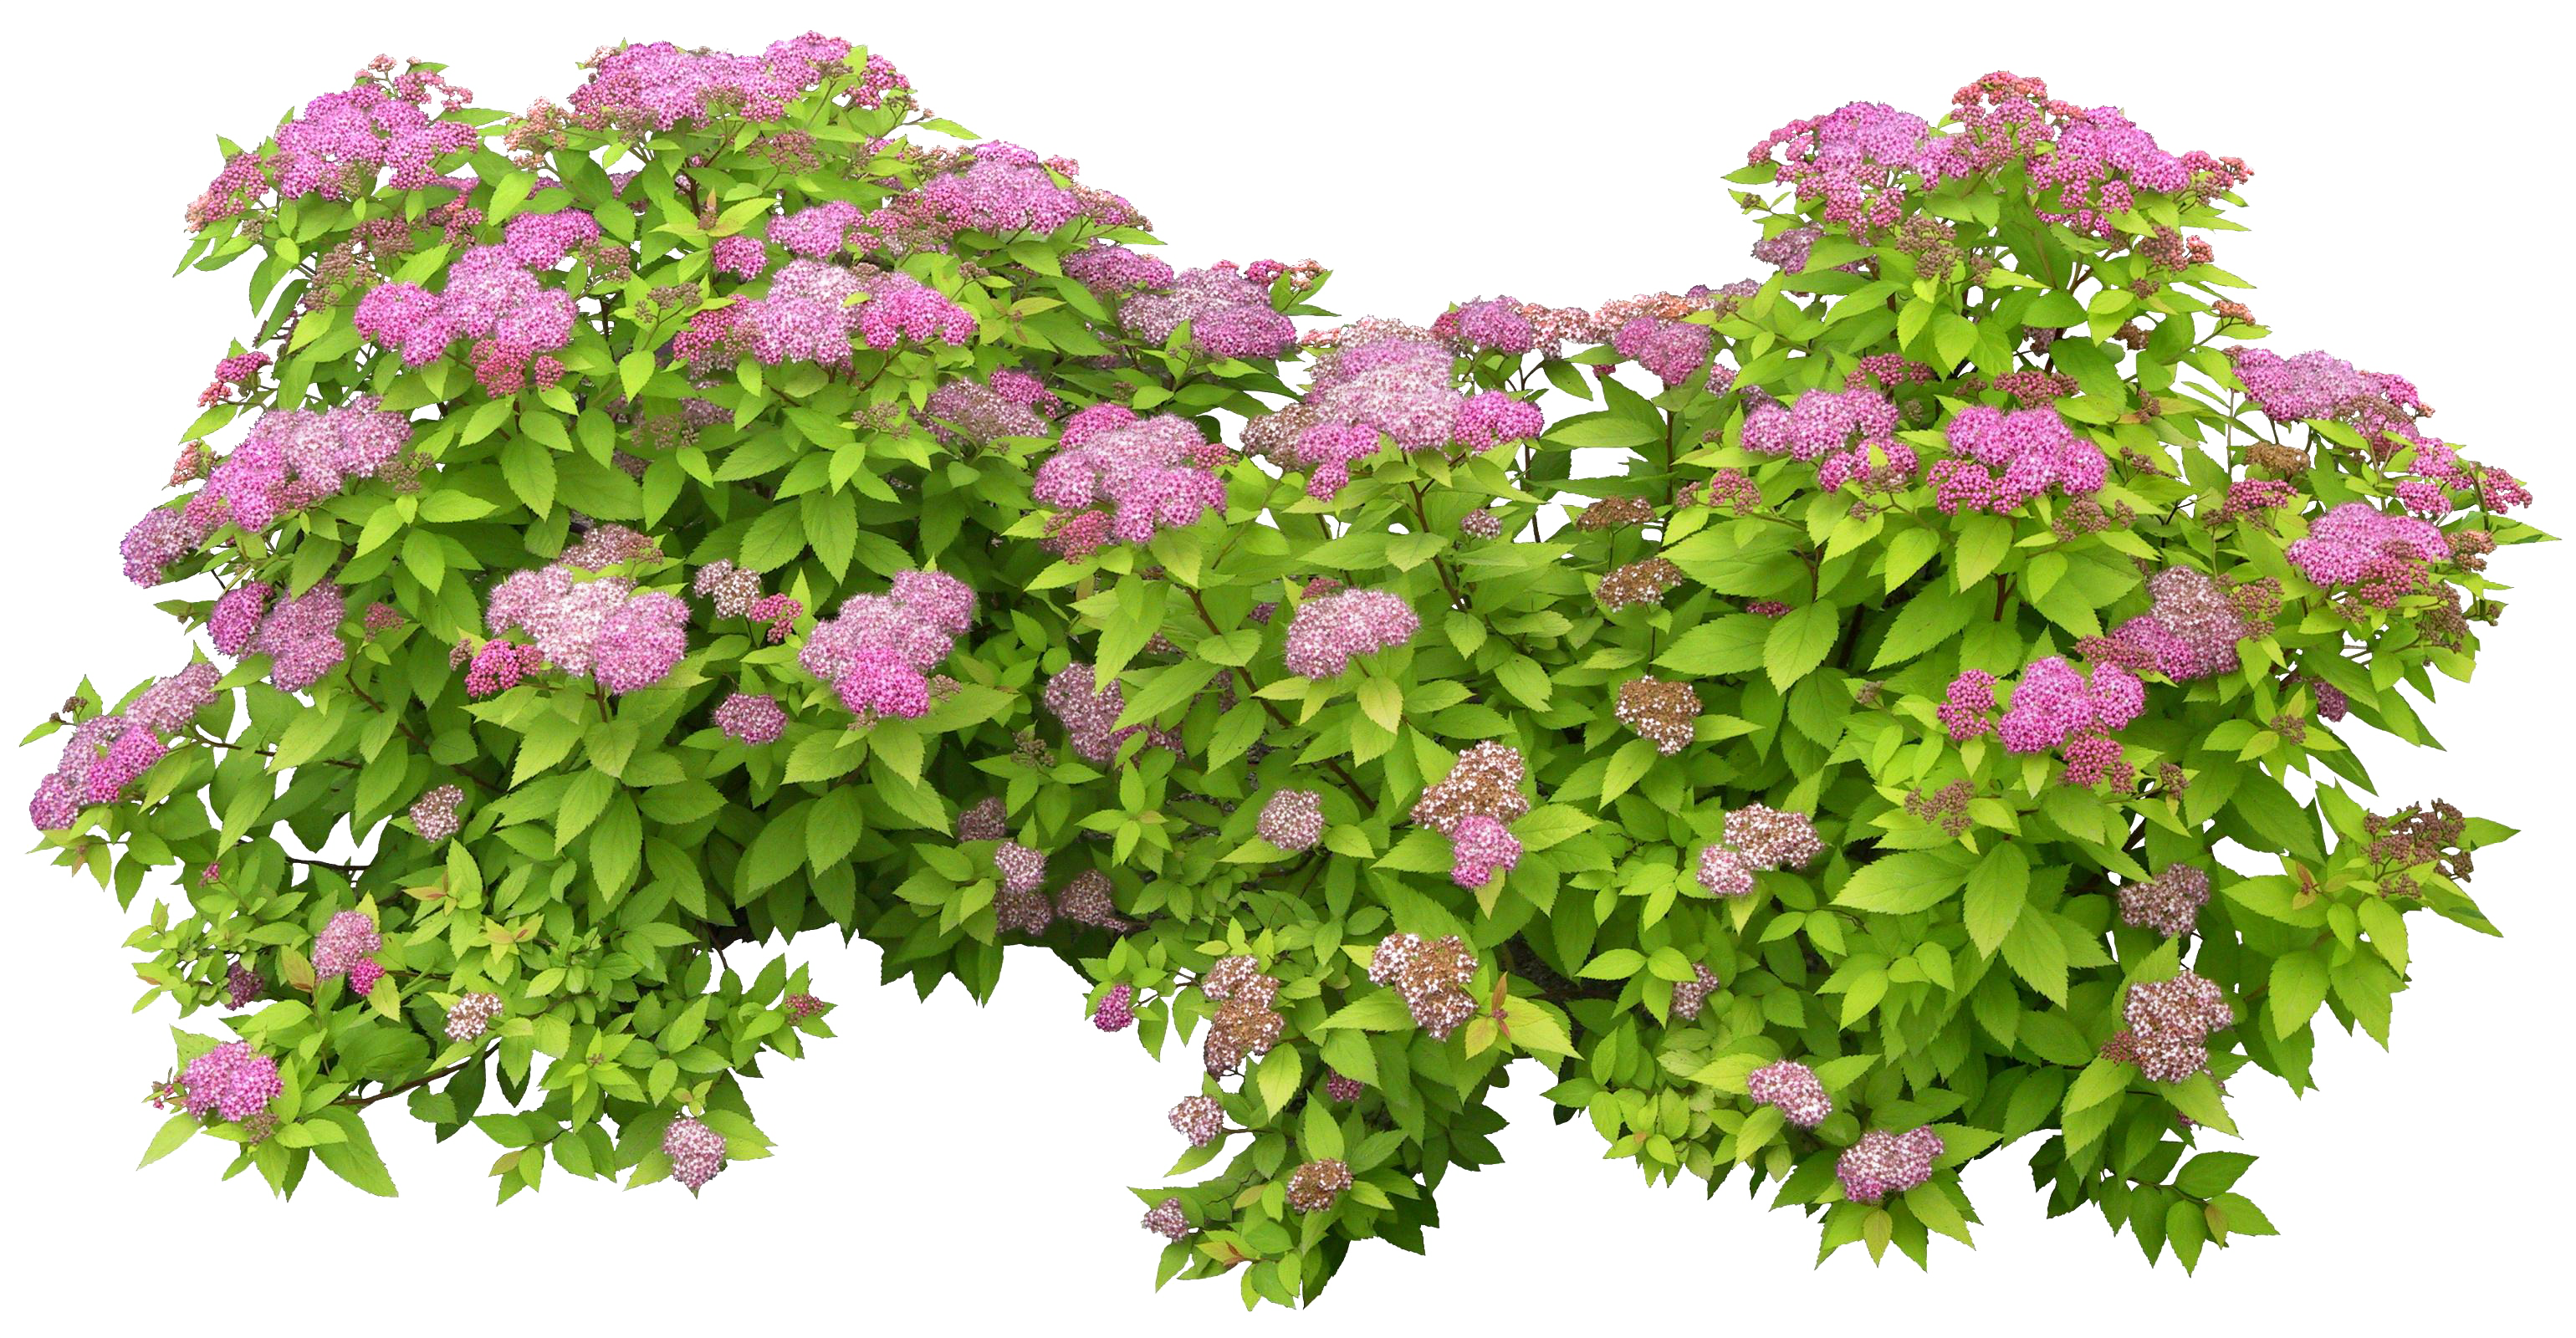 Green Bush Png - Transparent Background Flower Bush Png Clipart. 